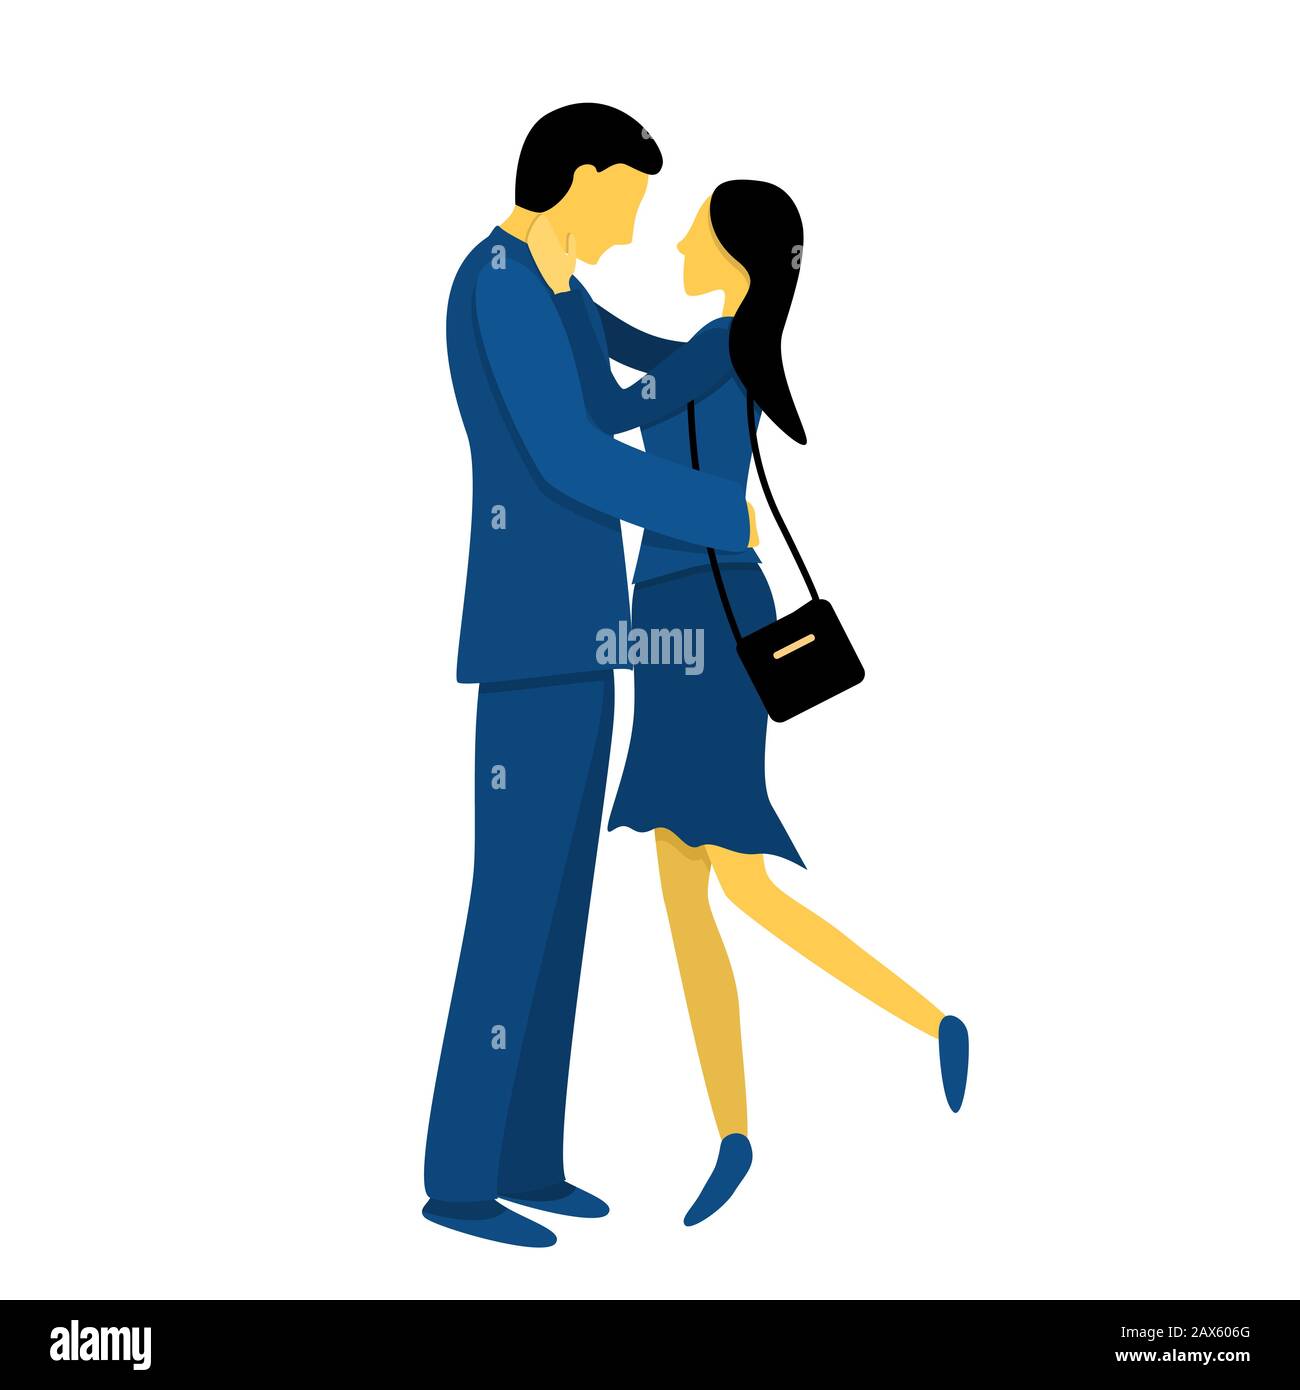 620+ Drawing Of Boyfriend Girlfriend Love Hugging Stock Illustrations,  Royalty-Free Vector Graphics & Clip Art - iStock